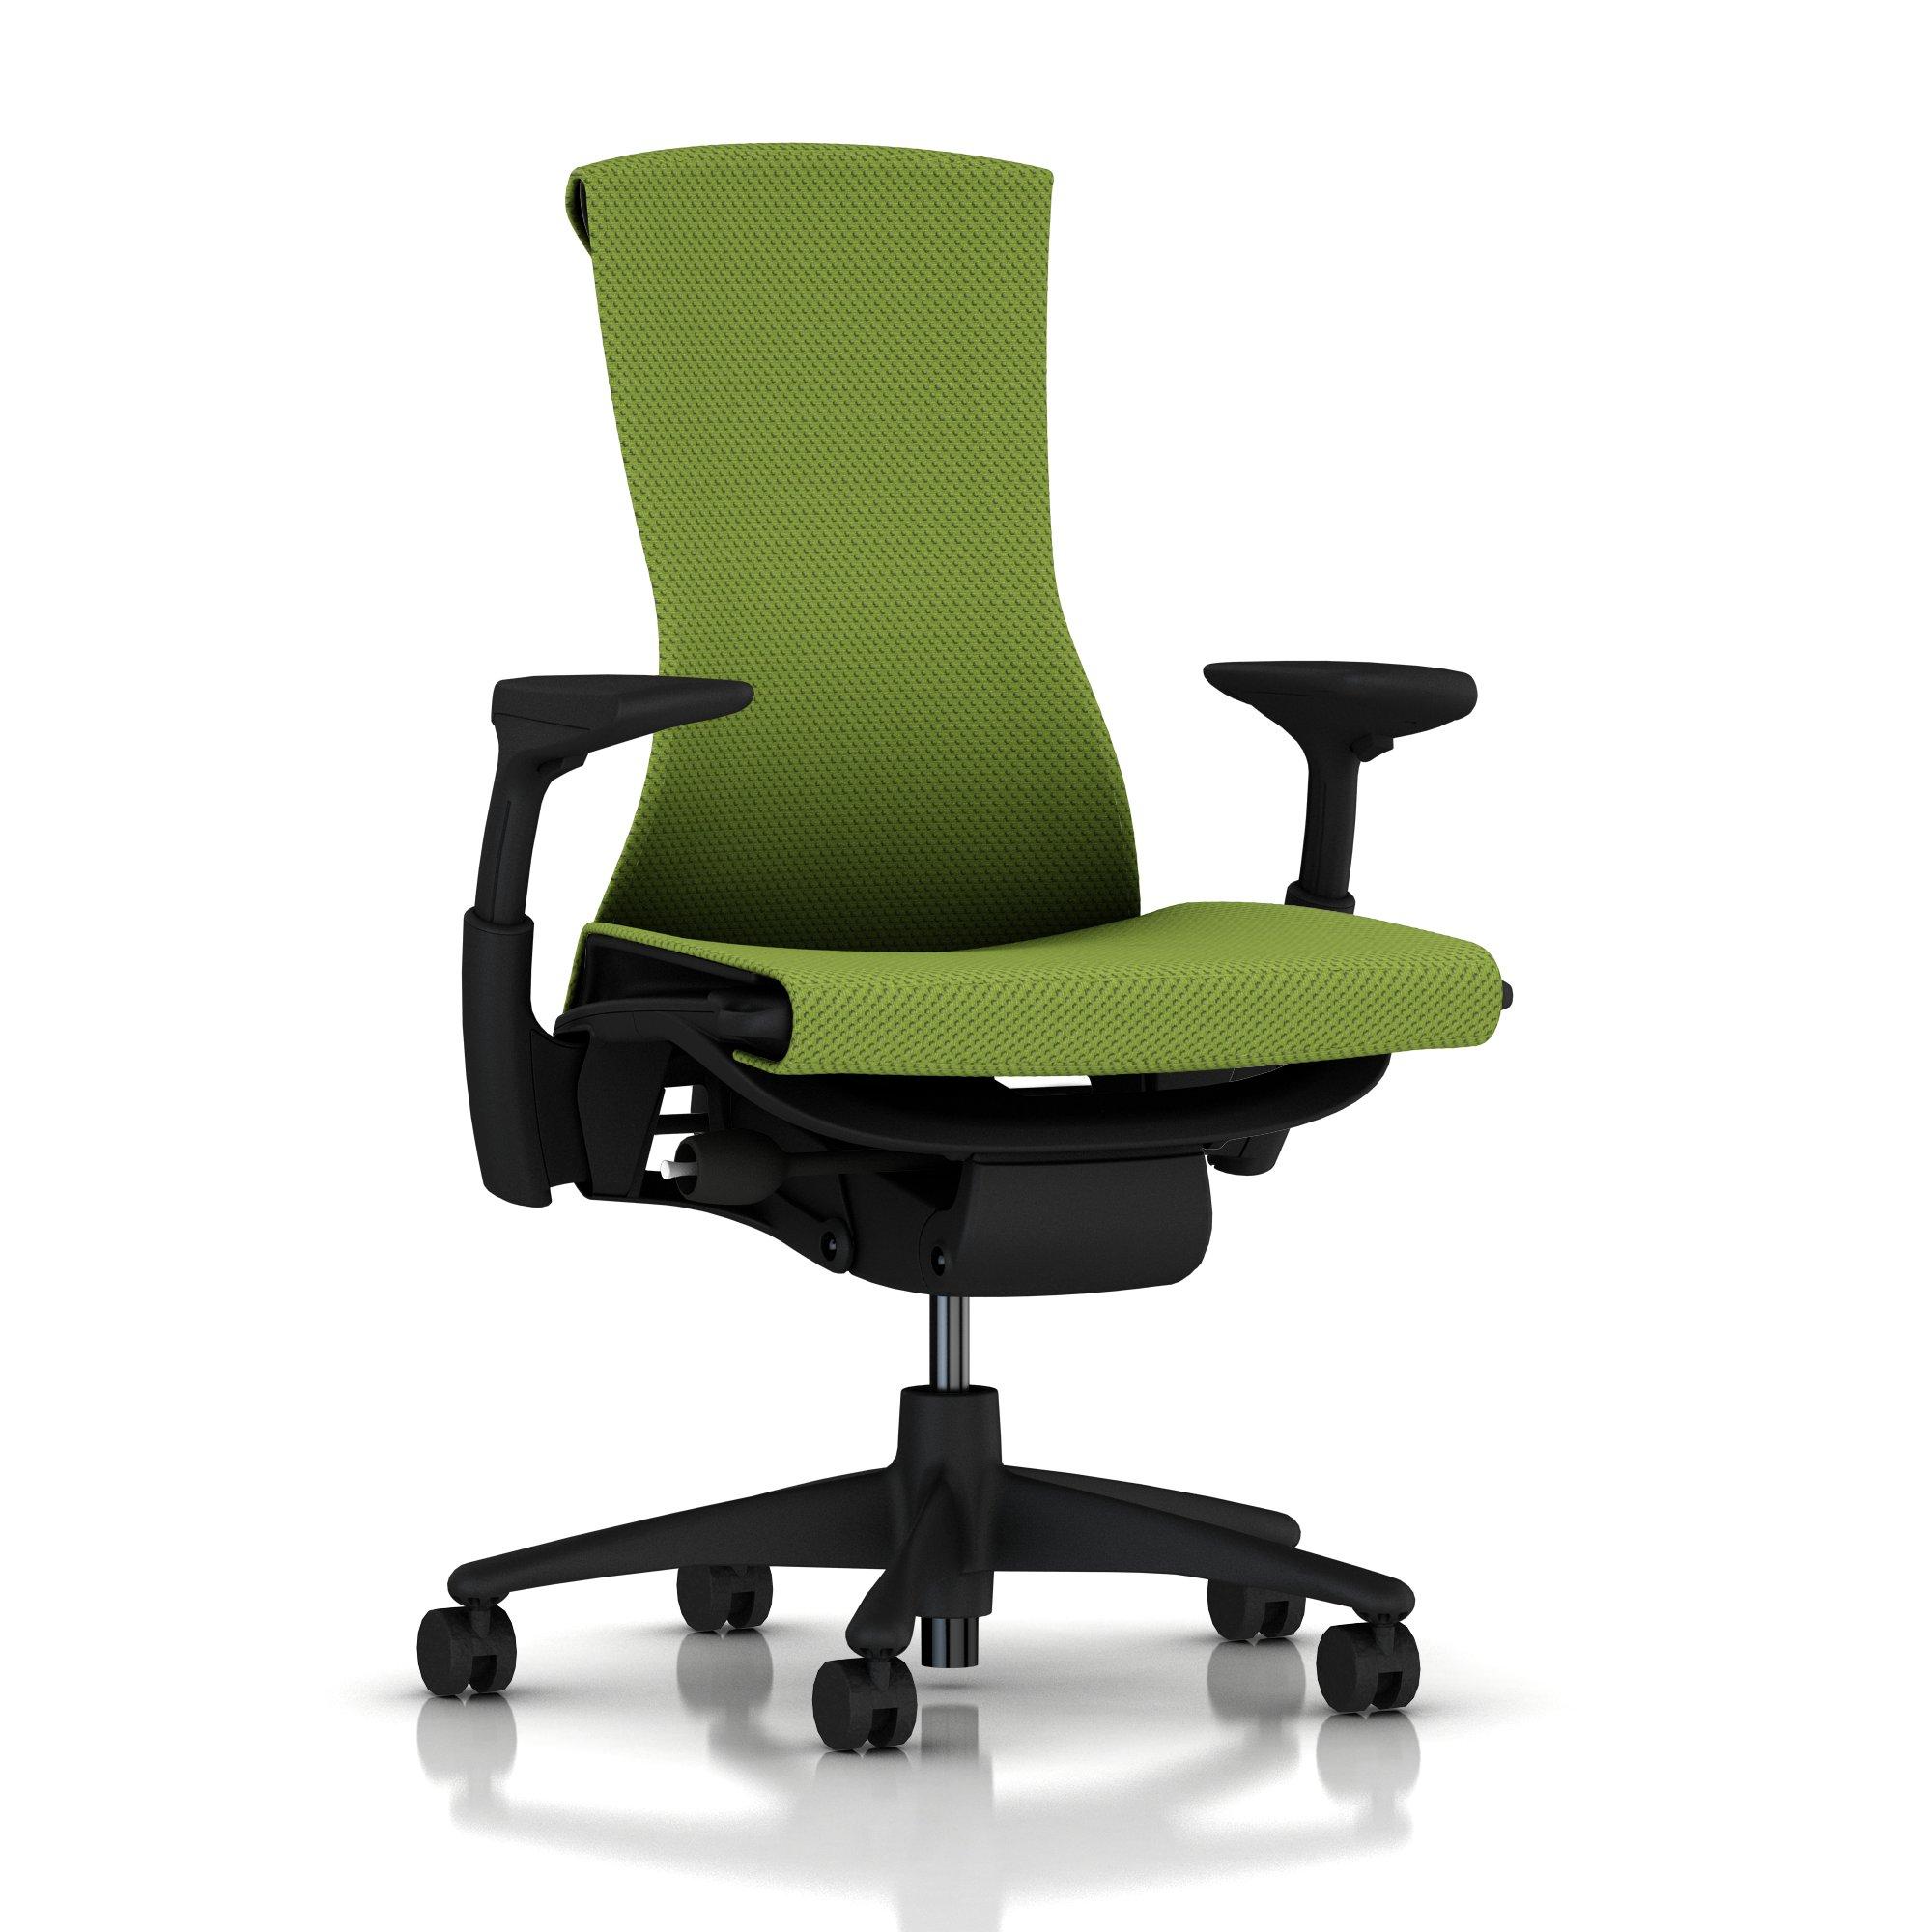 Herman Miller Herman Miller office chair green please read description 